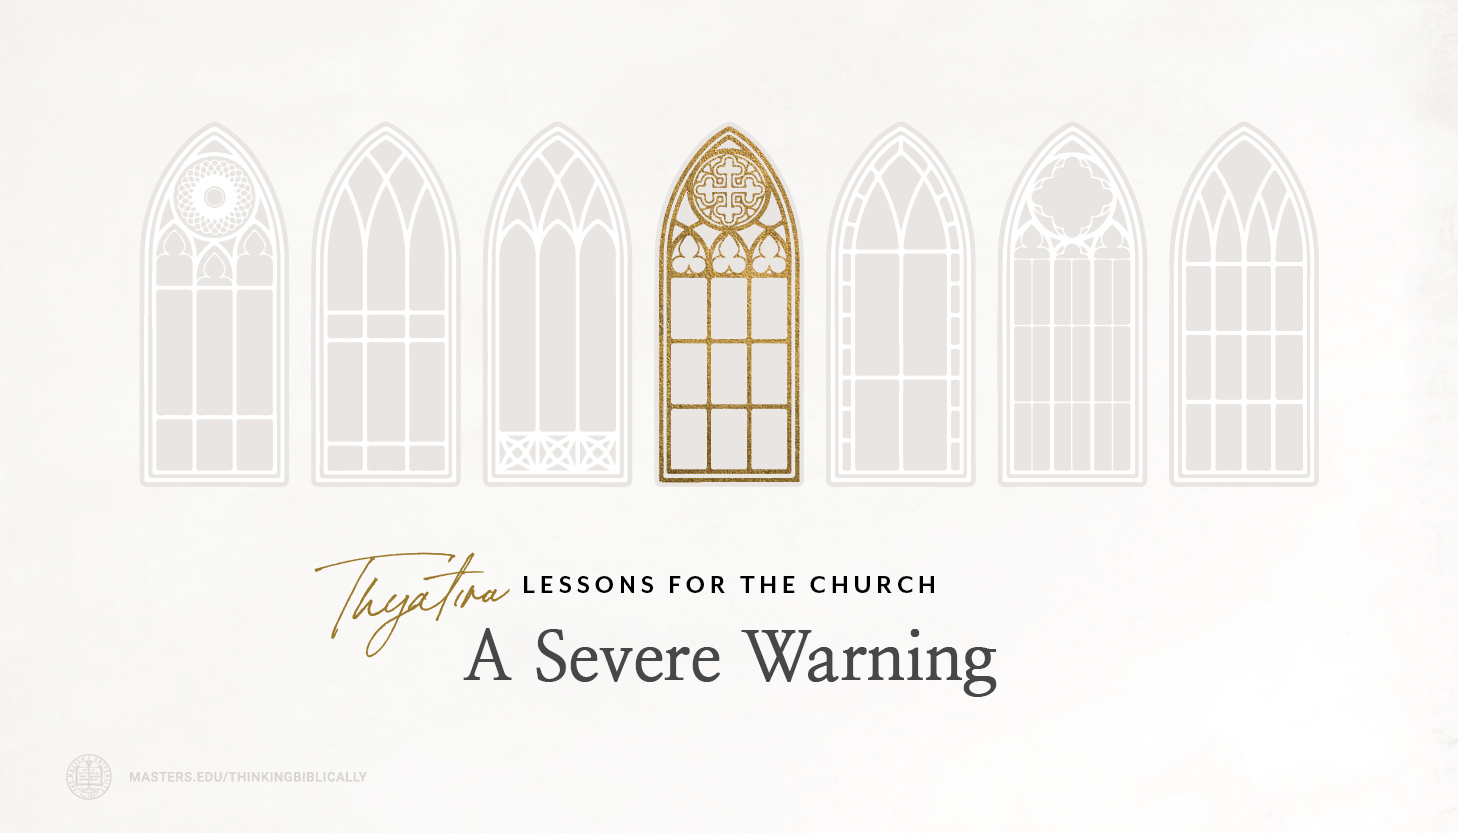 Thyatira: A Severe Warning